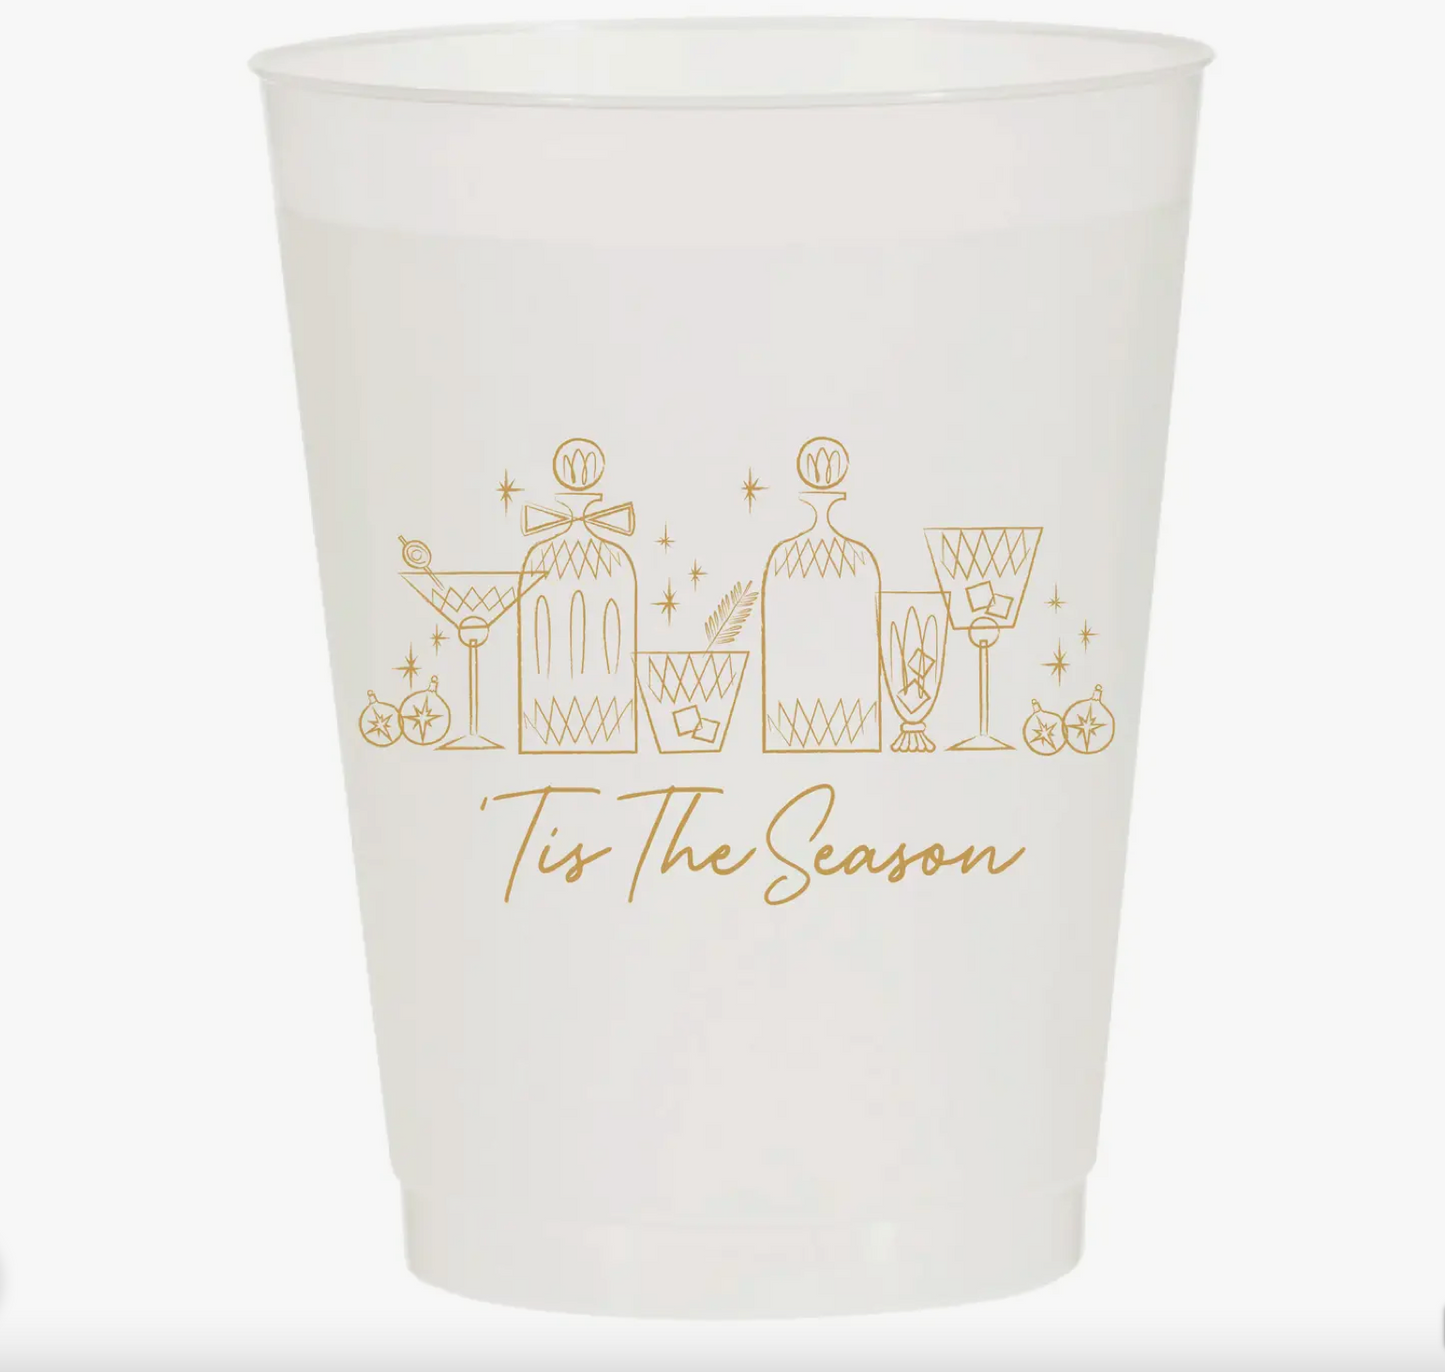 'Tis the Season' Shatterproof Cups, Set of 10